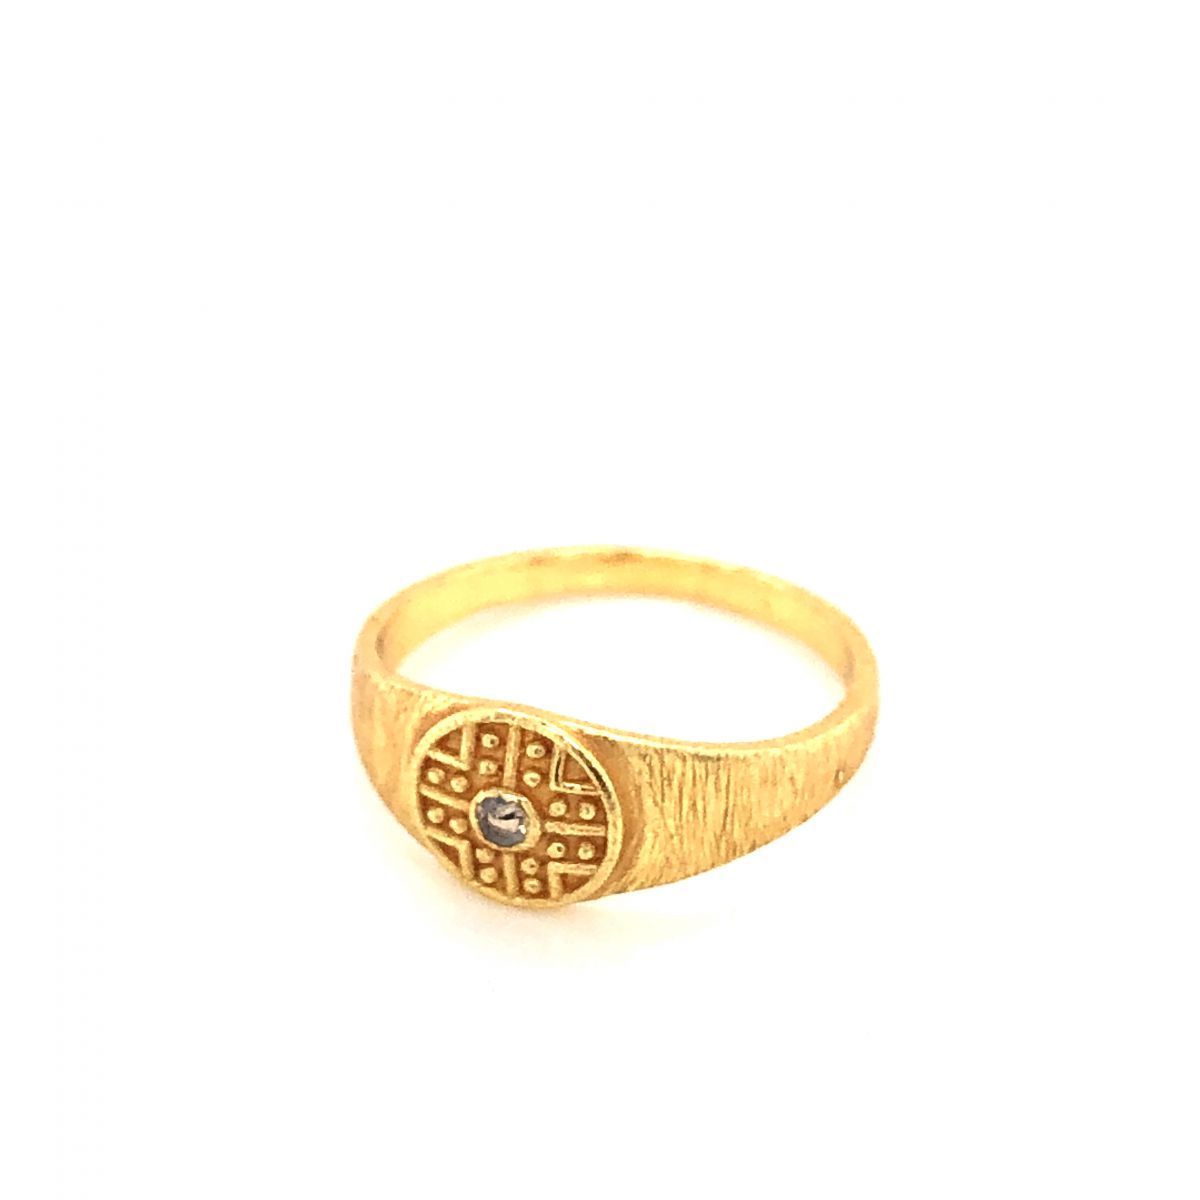 gg ring size 52 labyrinth labradorite gold plated